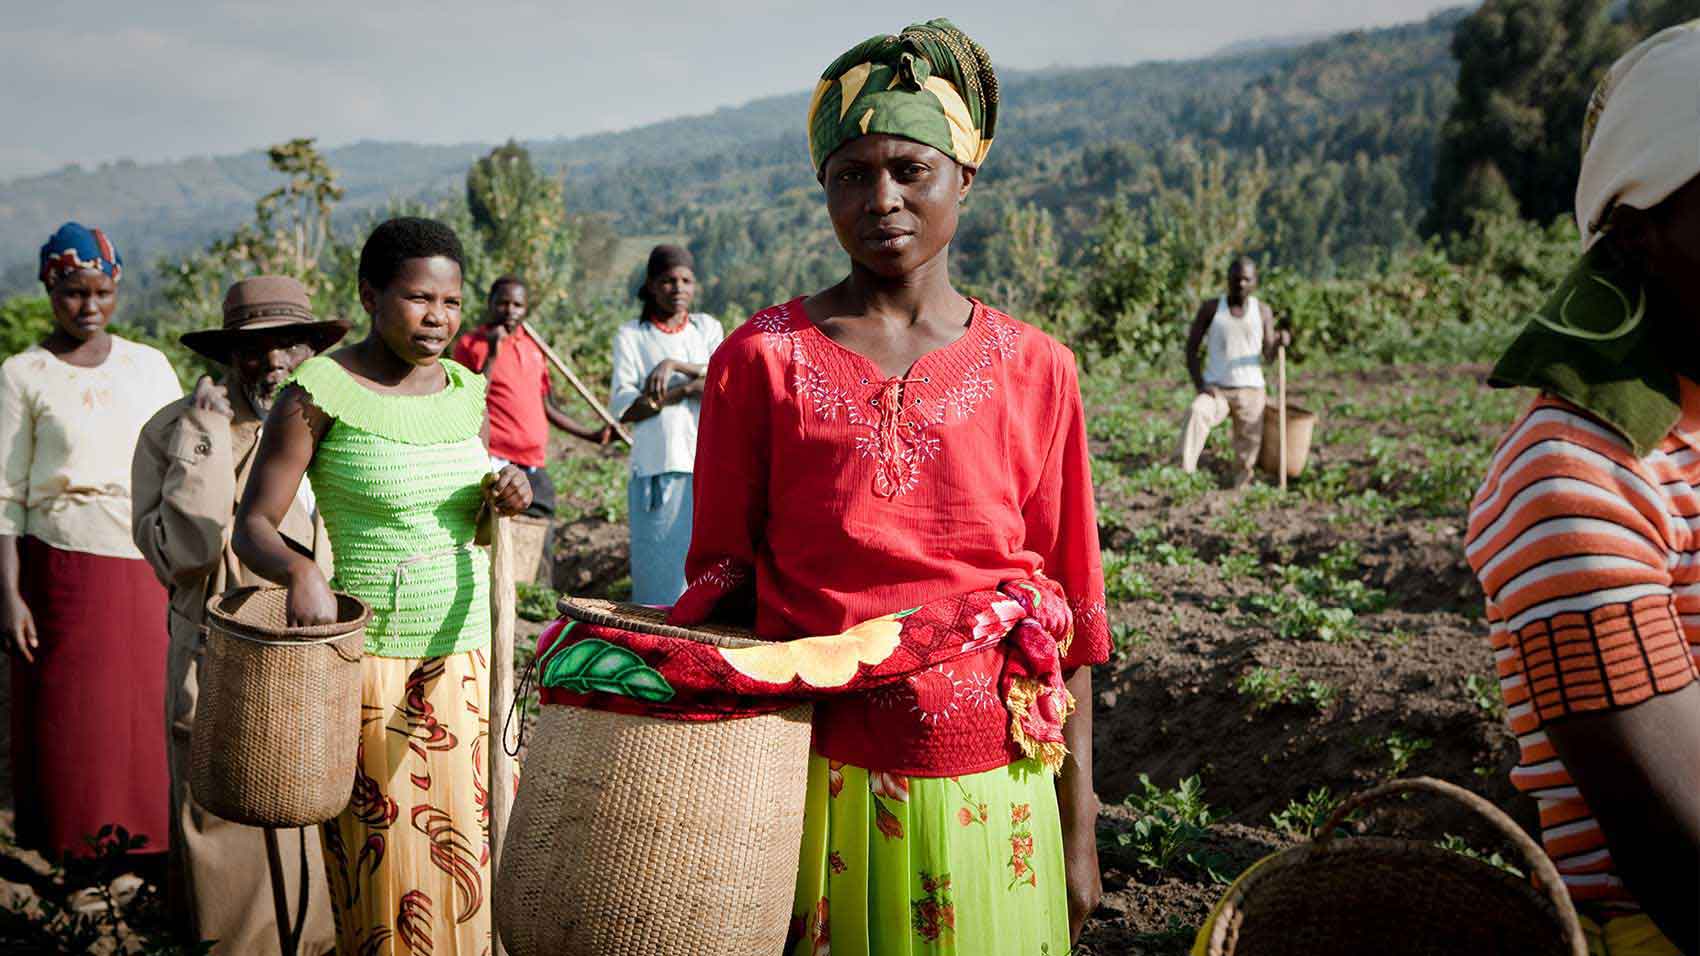 SC Johnson supports female entrepreneurs and  sustainable farming in Rwanda